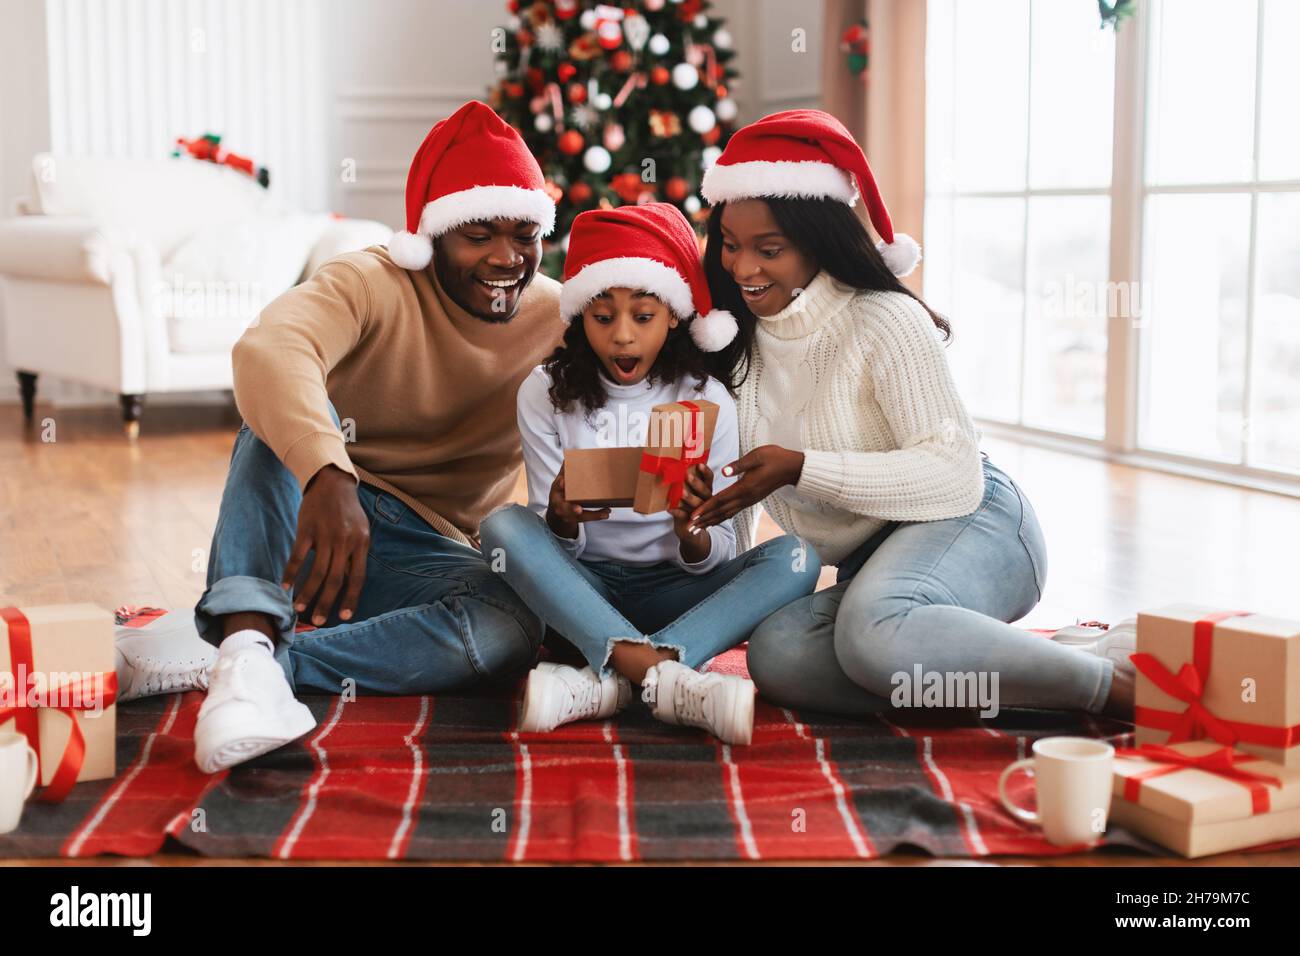 Surprised black girl celebrating Christmas unwrapping gift box Stock Photo